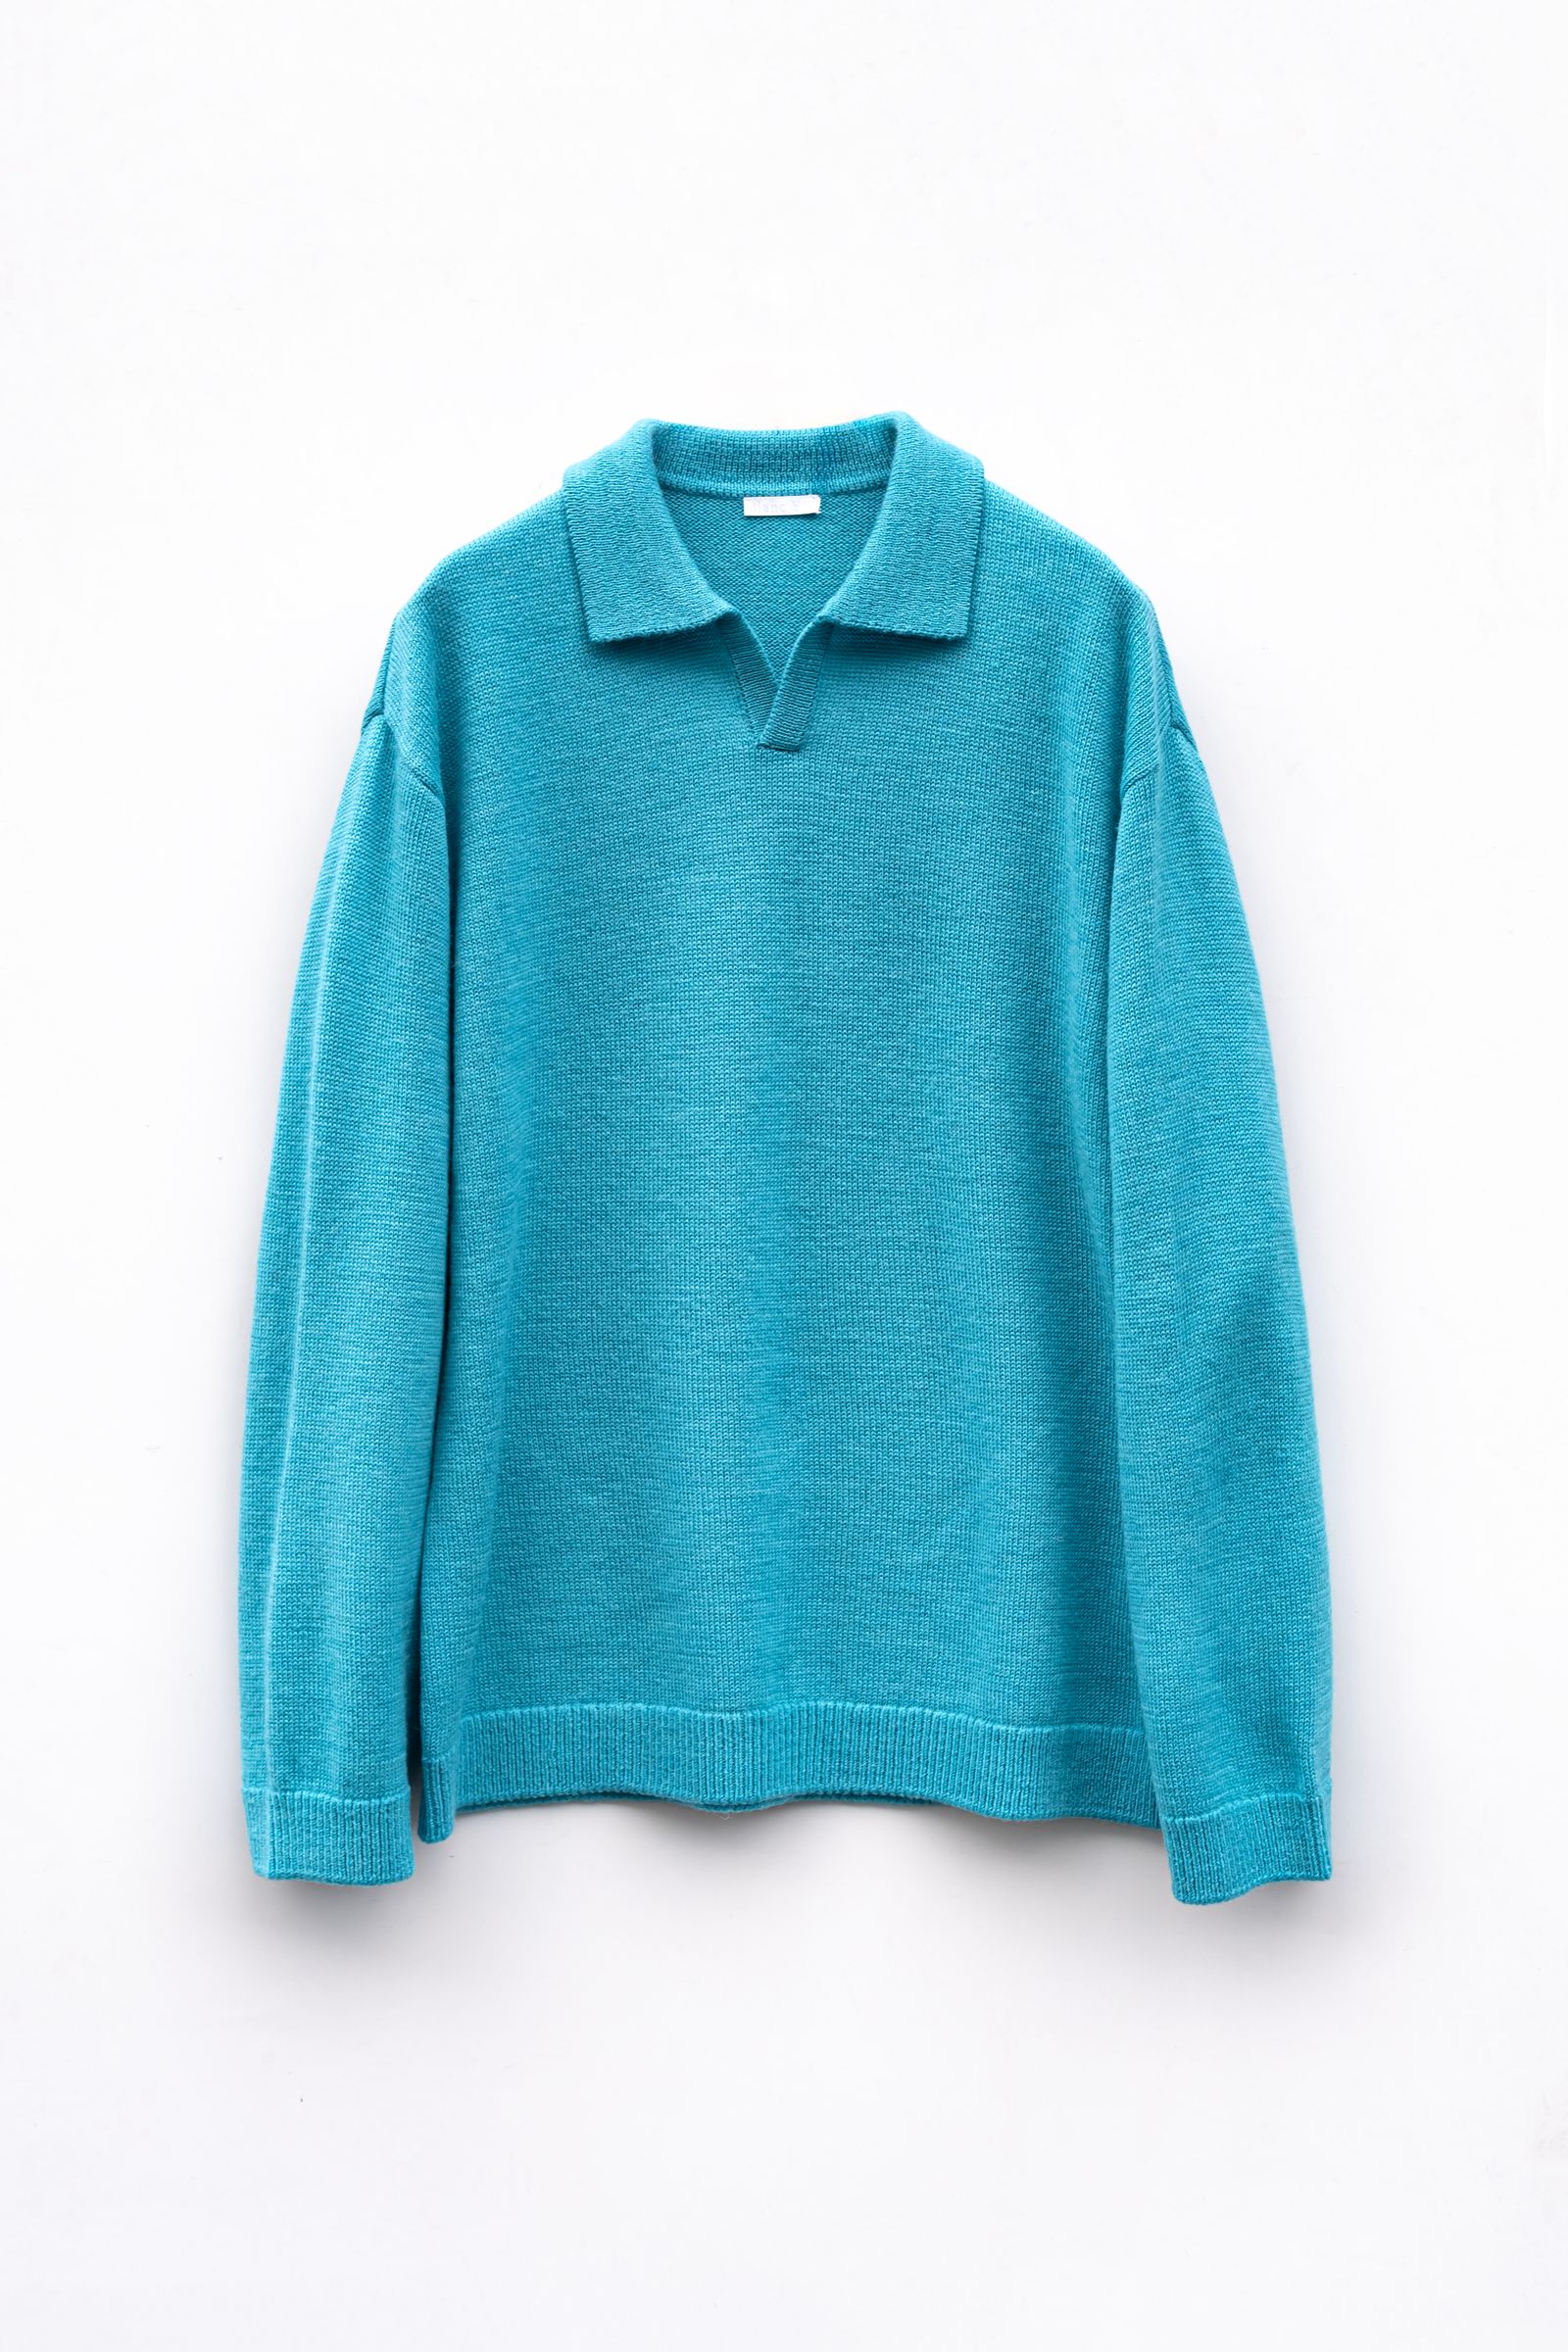 Blanc YM - Wool Knit skipper Shirt / Dark Gray | Retikle Online Store